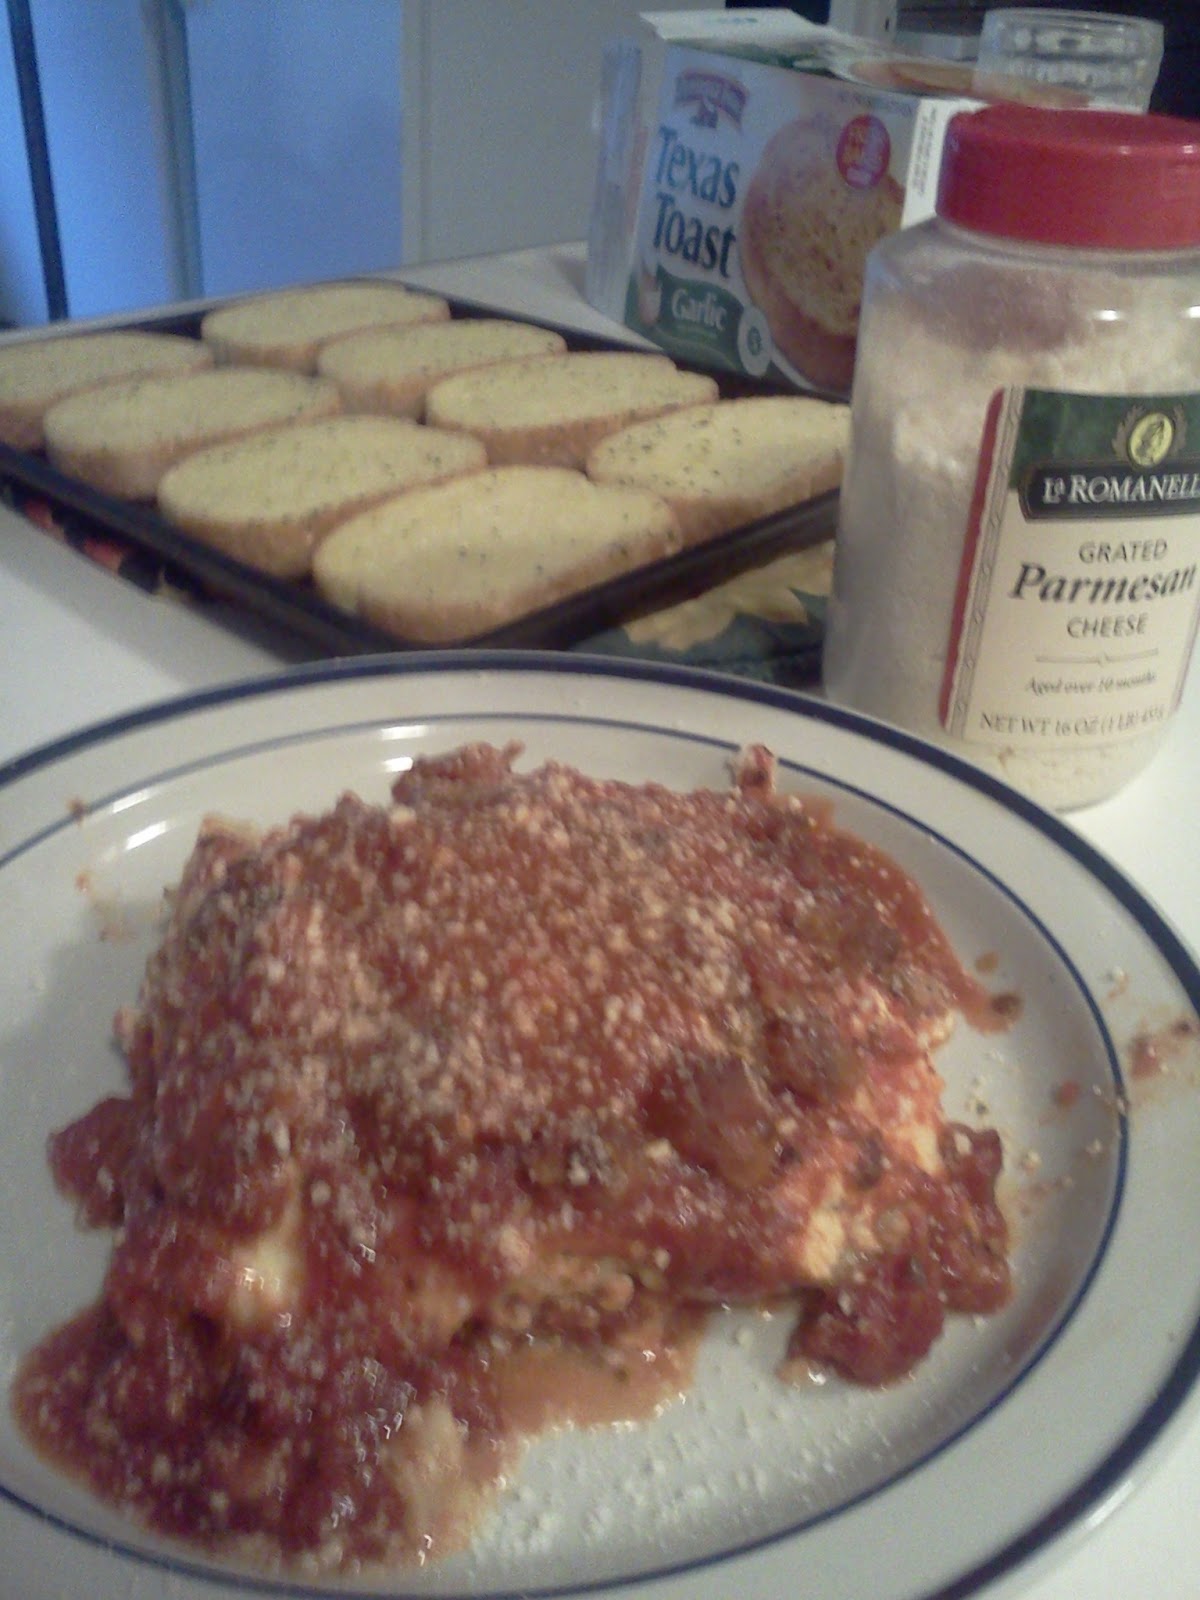 Gina's Real Life: My Delicious Lasagna - #LaRomanella Style!! ♥